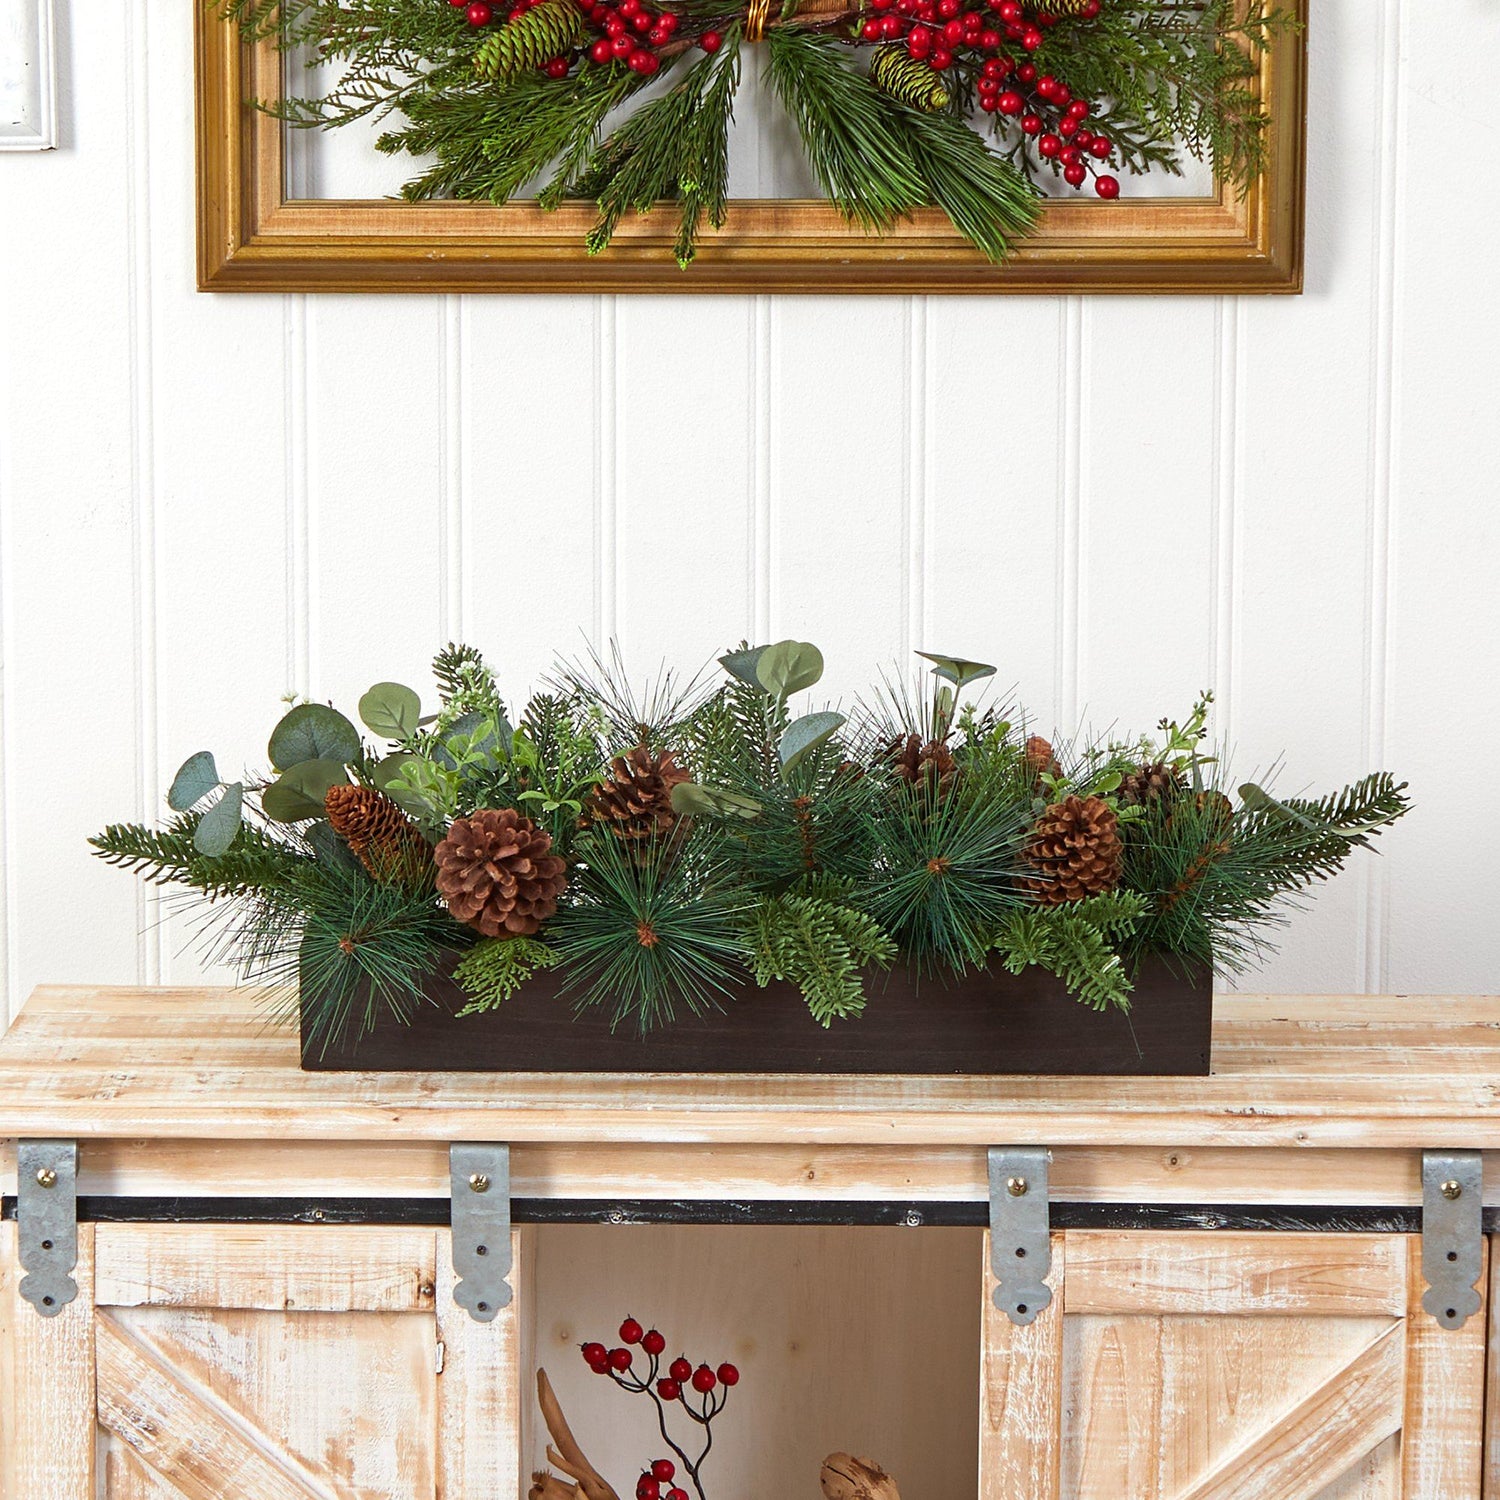 30” Evergreen Pine and Pine Cone Artificial Christmas Centerpiece Arrangement